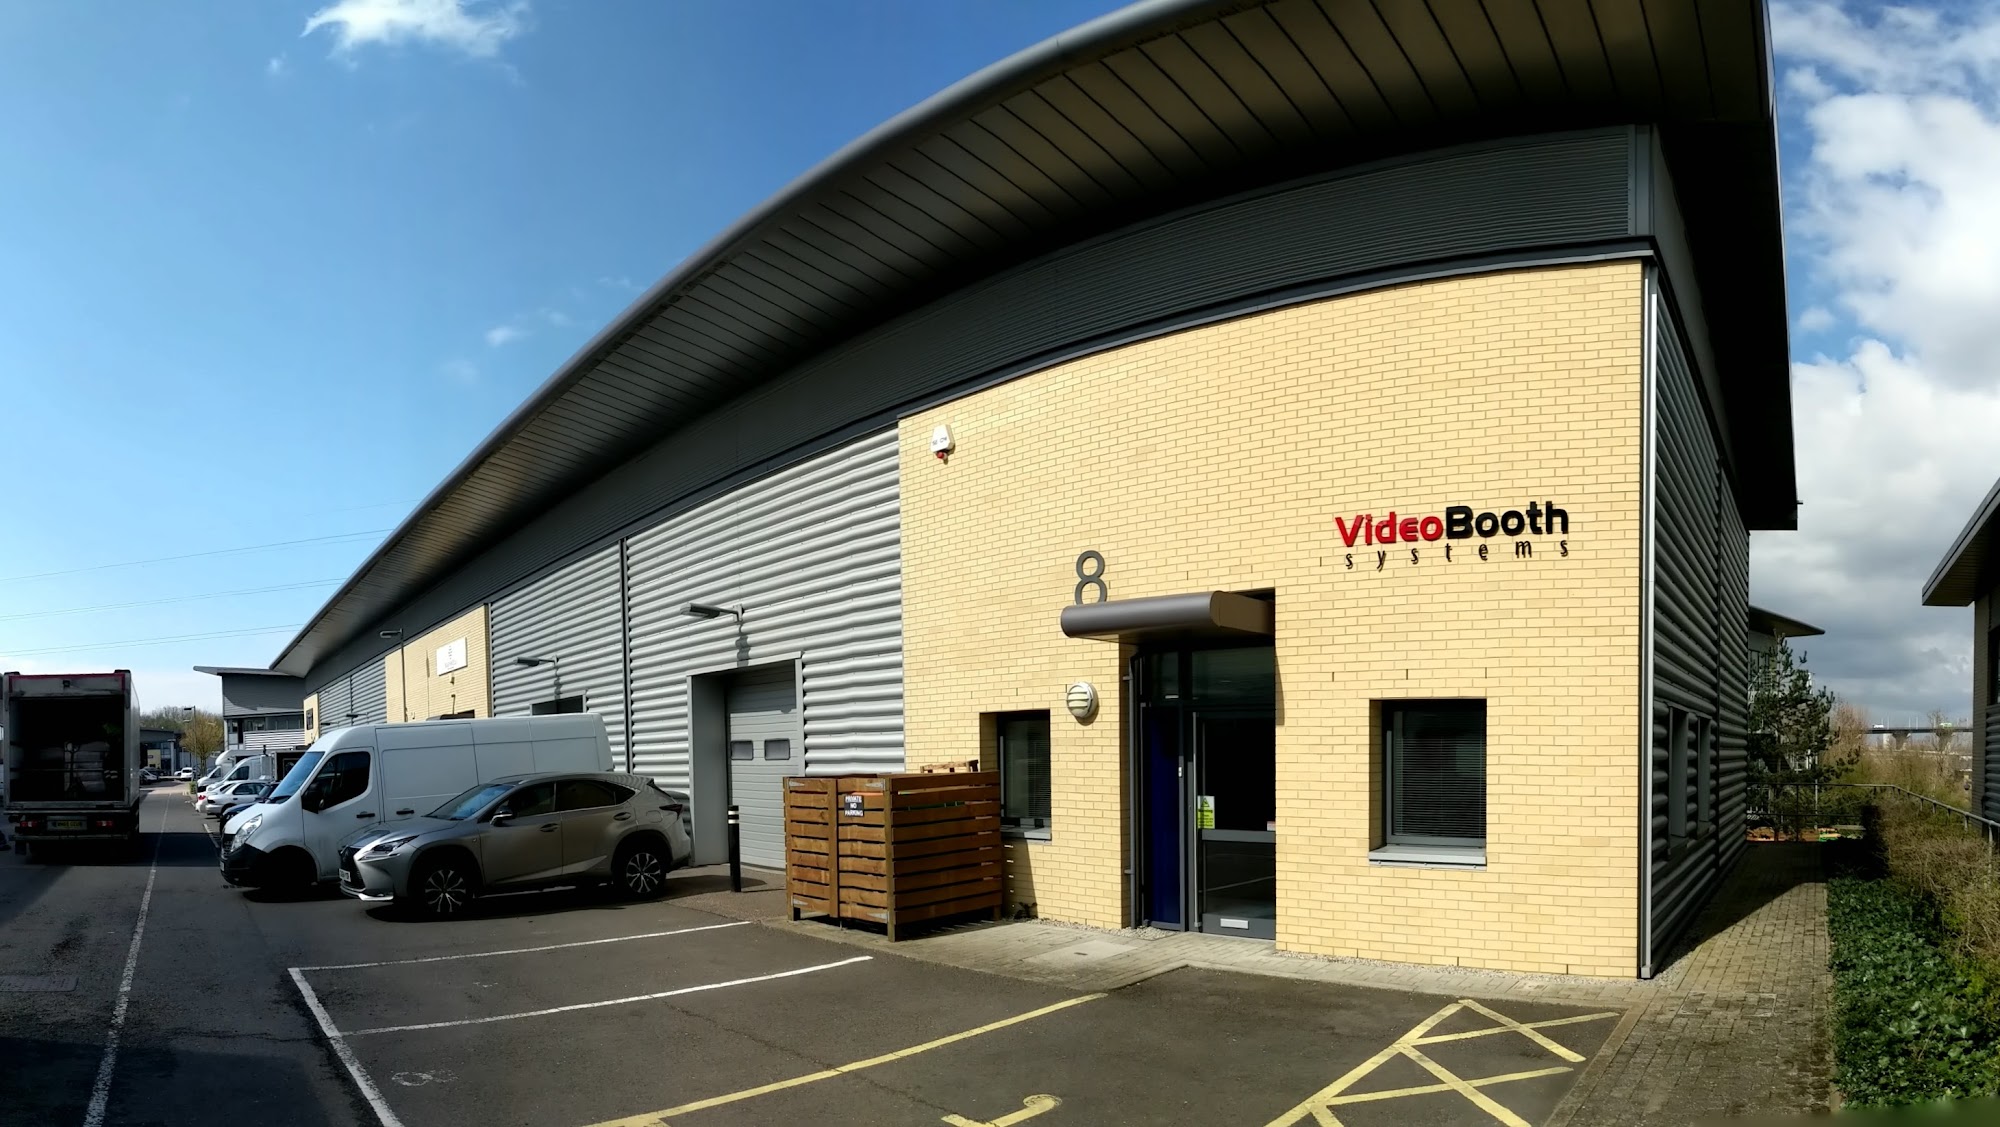 VideoBooth Systems Ltd